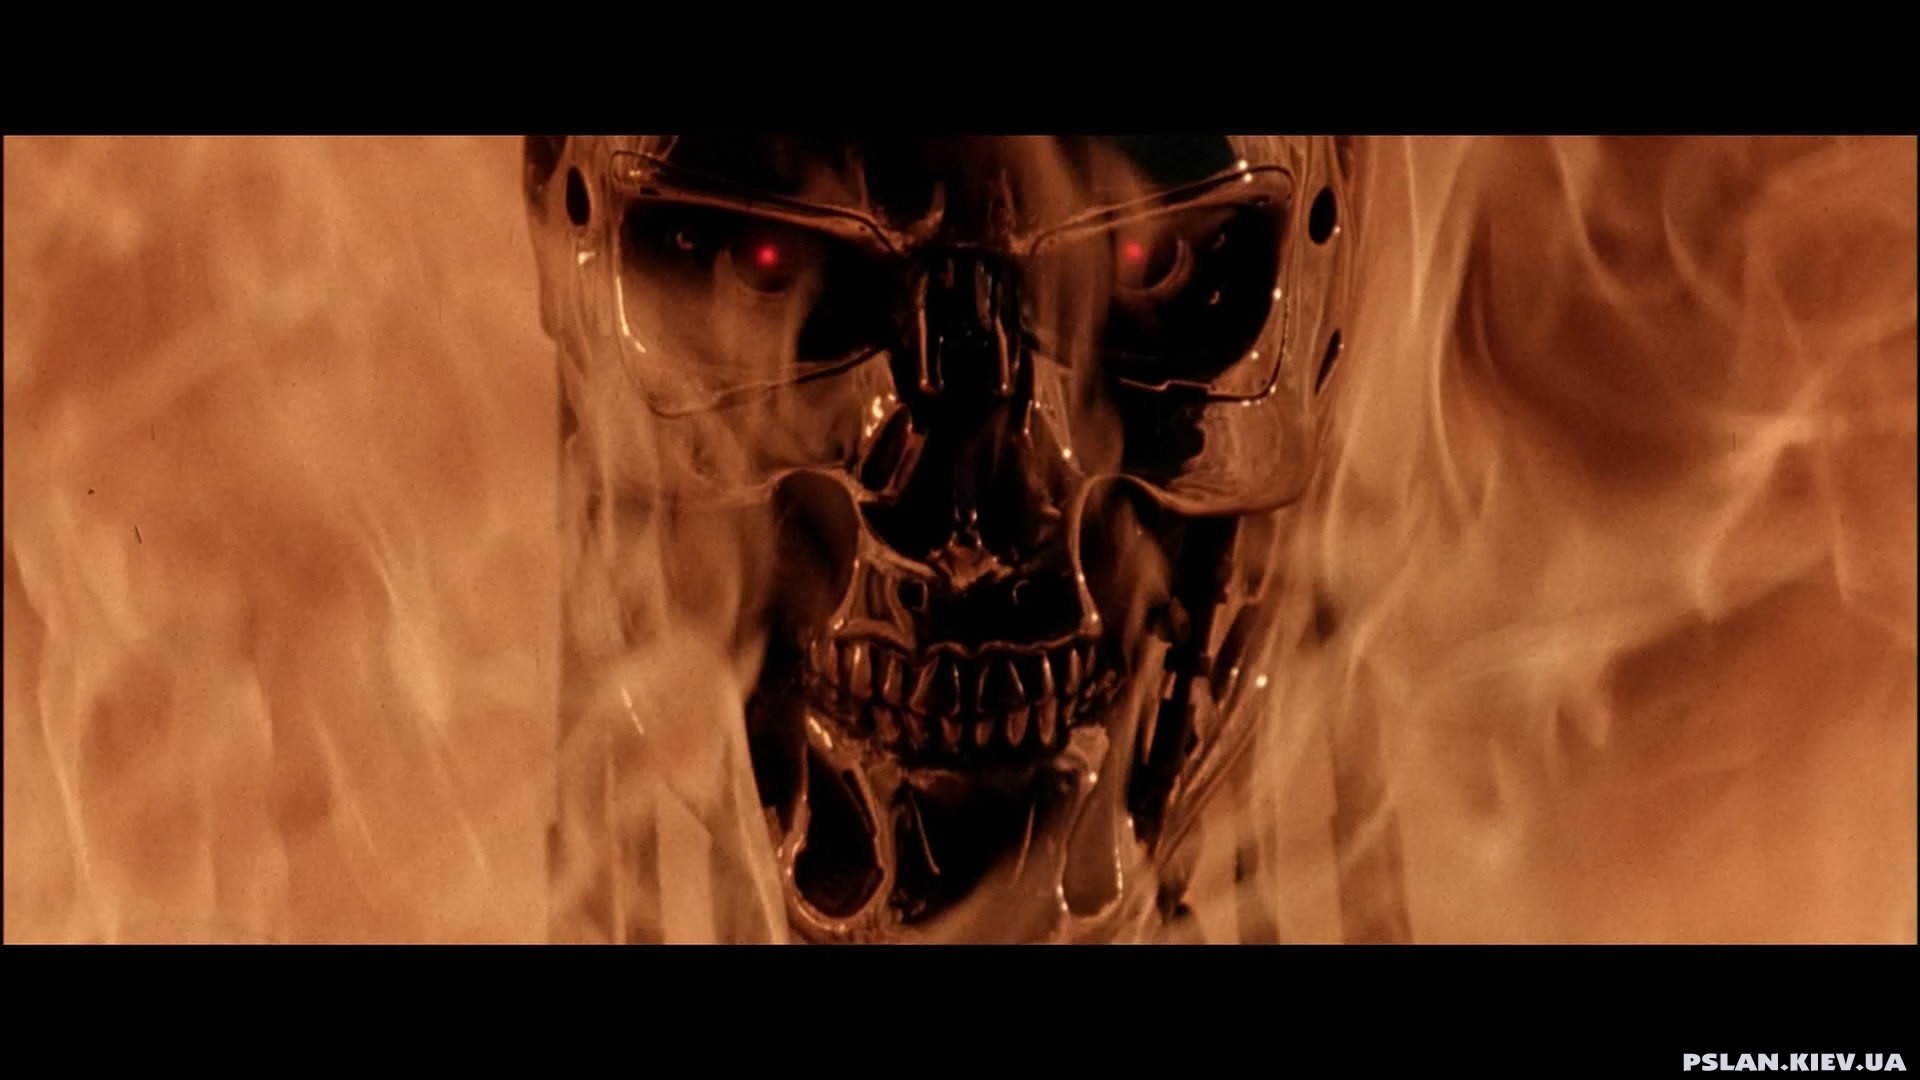 General 1920x1080 movies Terminator Terminator 2 endoskeleton machine fire apocalyptic cyborg film stills skull science fiction red eyes